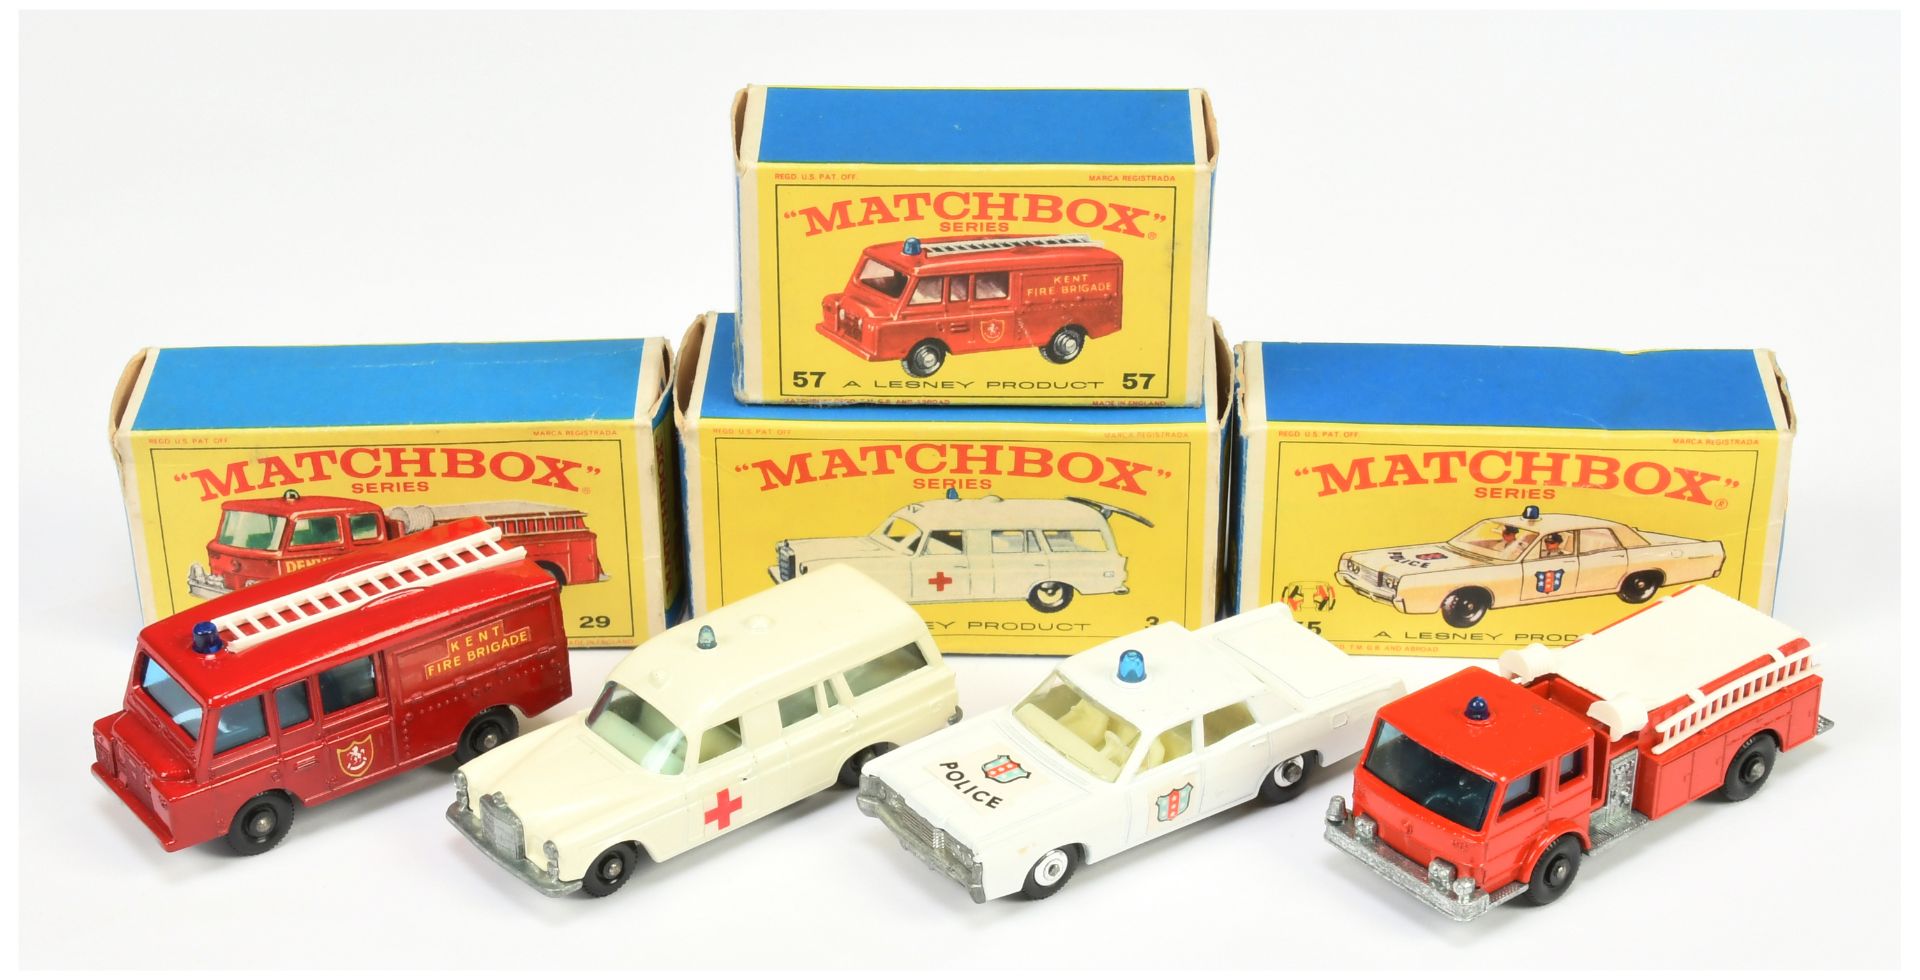 Matchbox Regular Wheels group of Emergency Vehicles (1) 3c Mercedes "Ambulance" - off white, with...